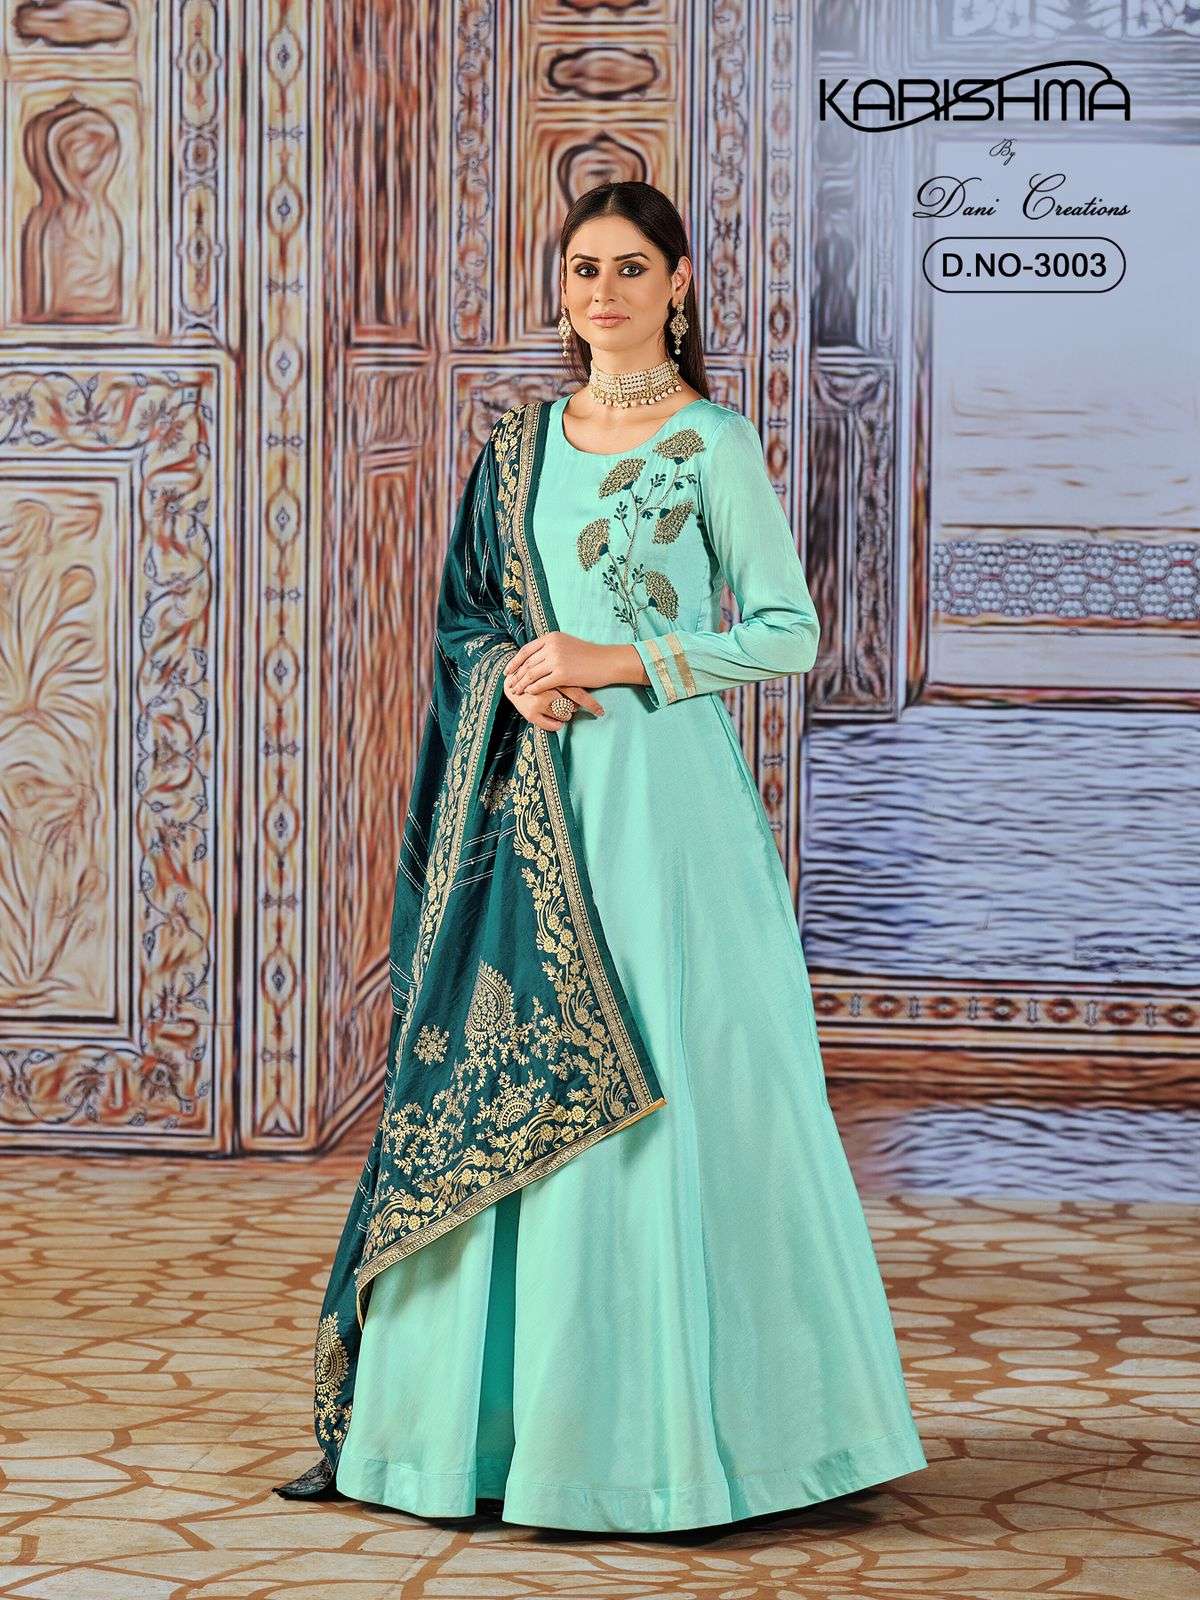 daani creation karishma 3001-3004 series party wear designer gown with dupatta wholesale price surat